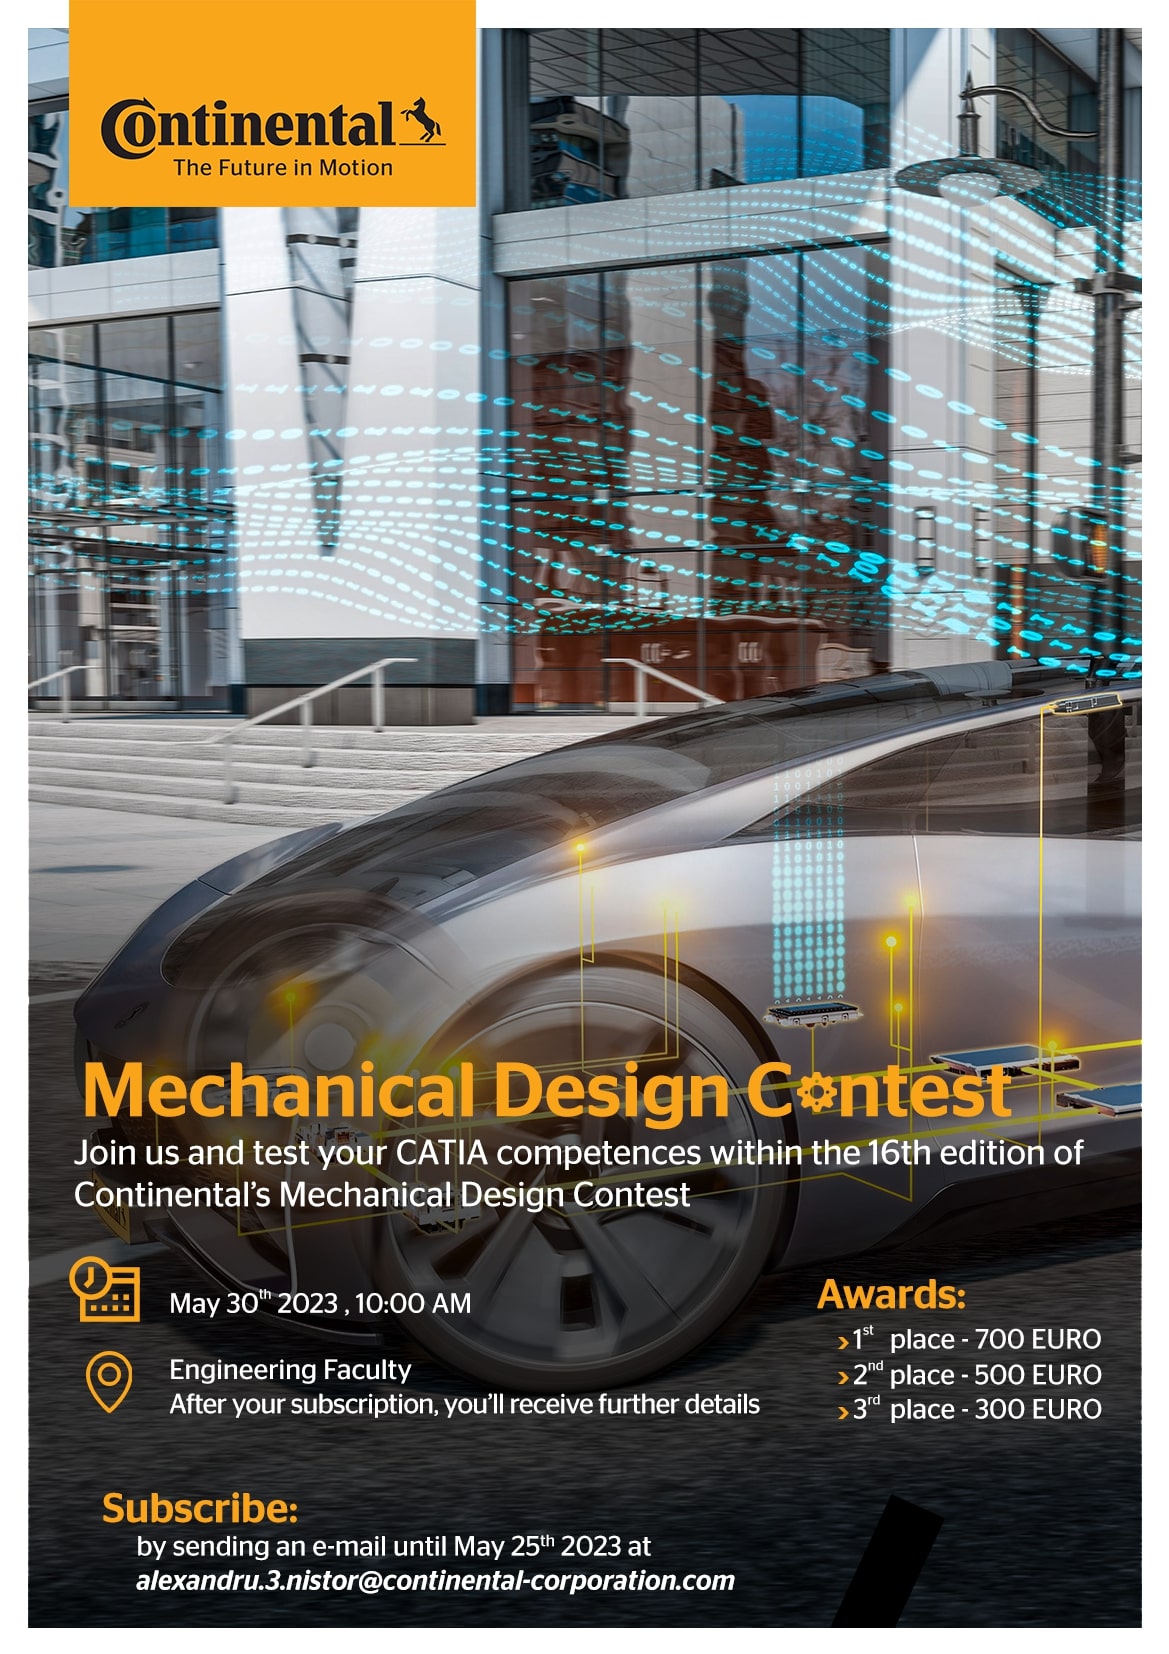 Continental Mechanical Design Contest